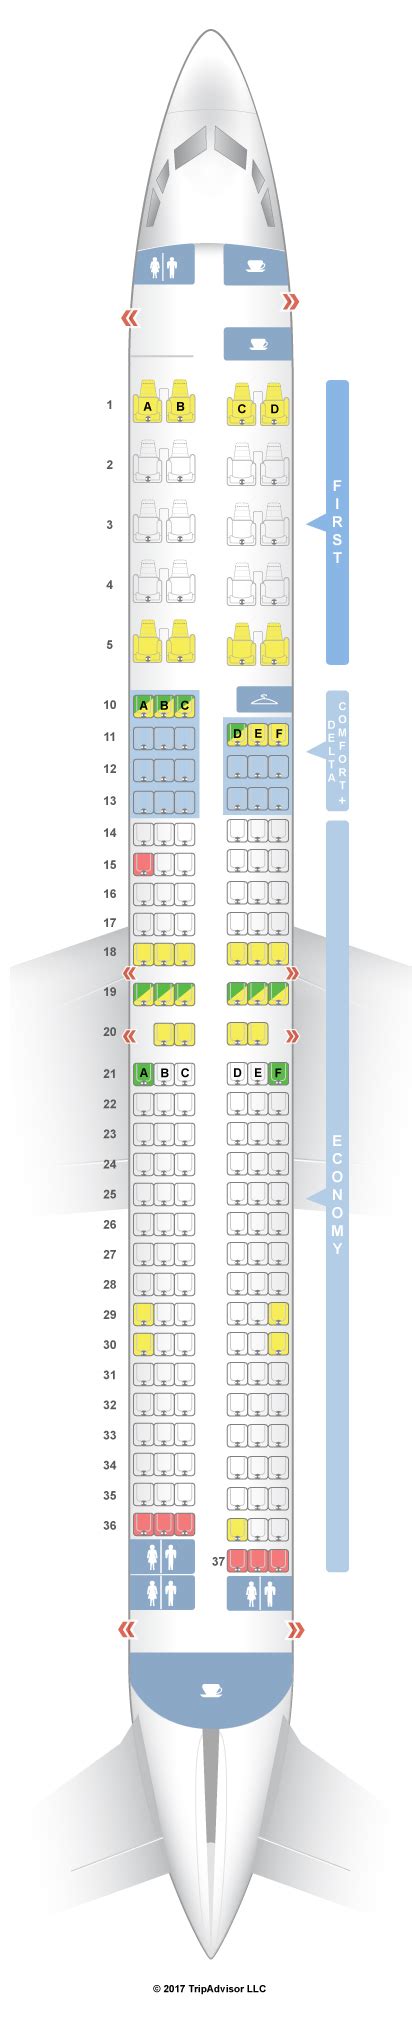  Boeing 737-900 (739) Layout 3; Boeing 757-200 (752) Layout 1; ... SeatGuru was created to help travelers choose the best seats and in-flight amenities. Forum; . 